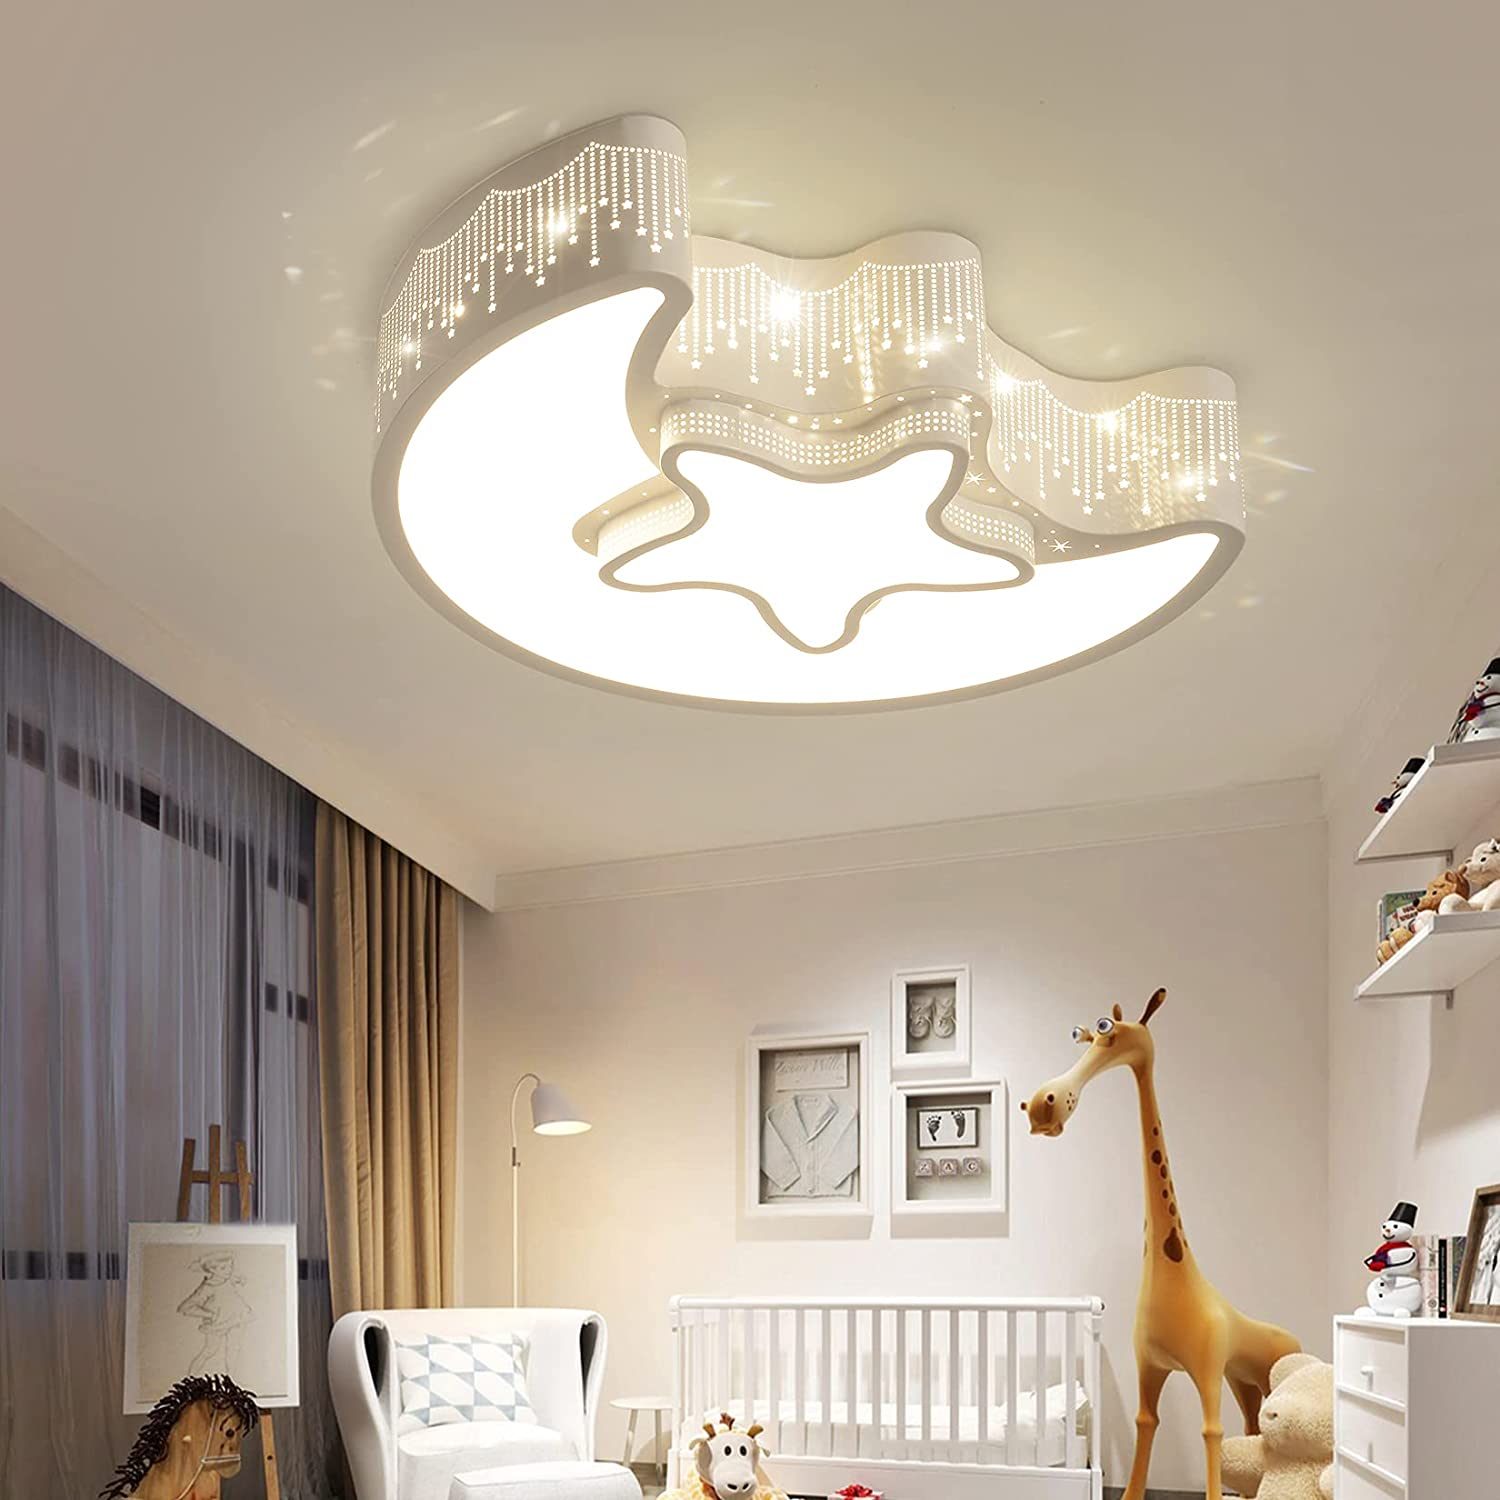 Close to Ceiling Light fixtures Modern Girl’s Bedroom Ceiling Light Metal Chandeliers Moon Star Shape Lighting for Bedroom Kids Room